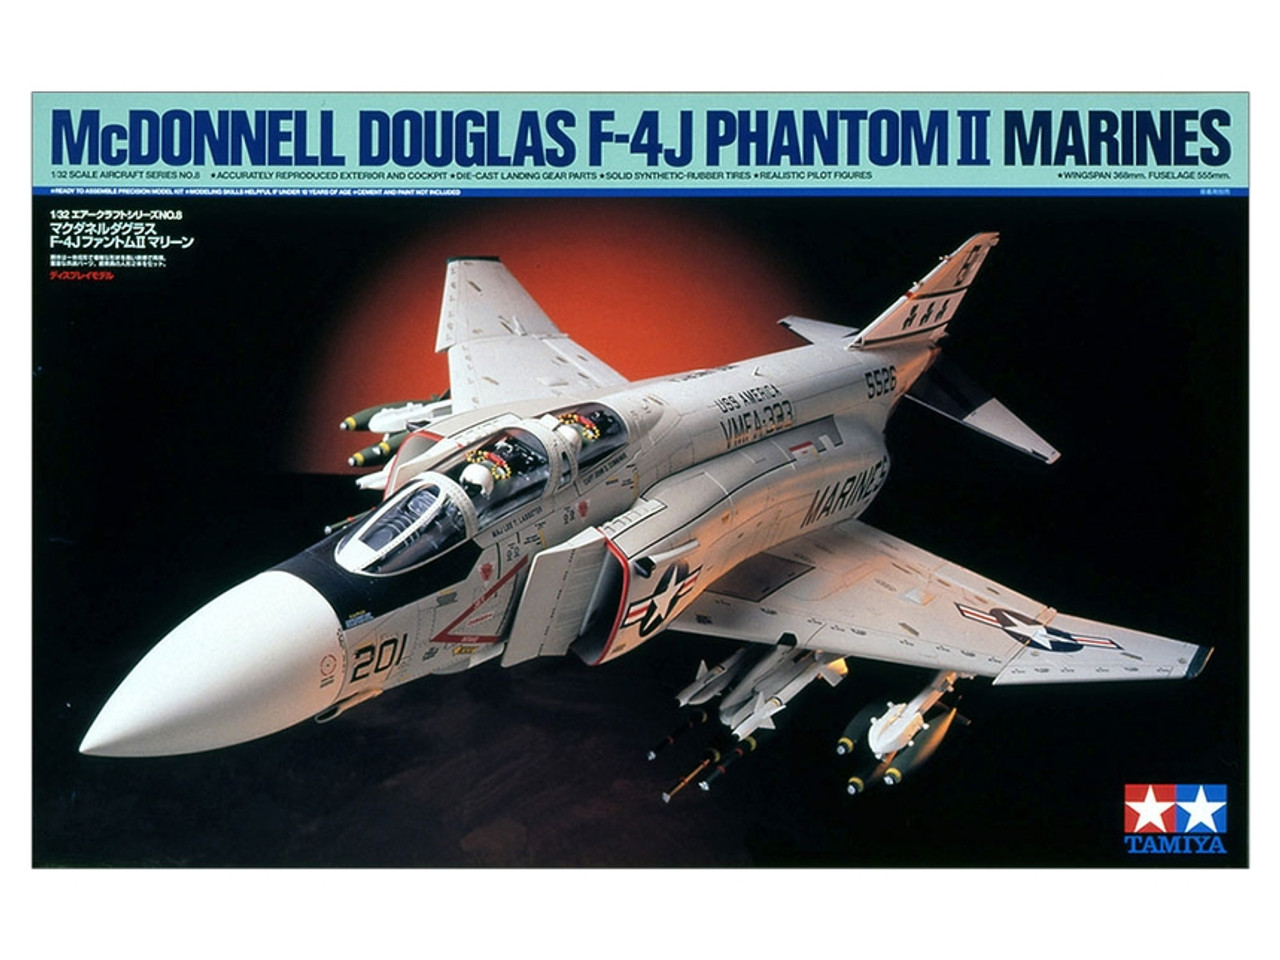 Tamiya 60308 1/32 Mcdonnell F-4 J Phantom II Plastic Model Kit